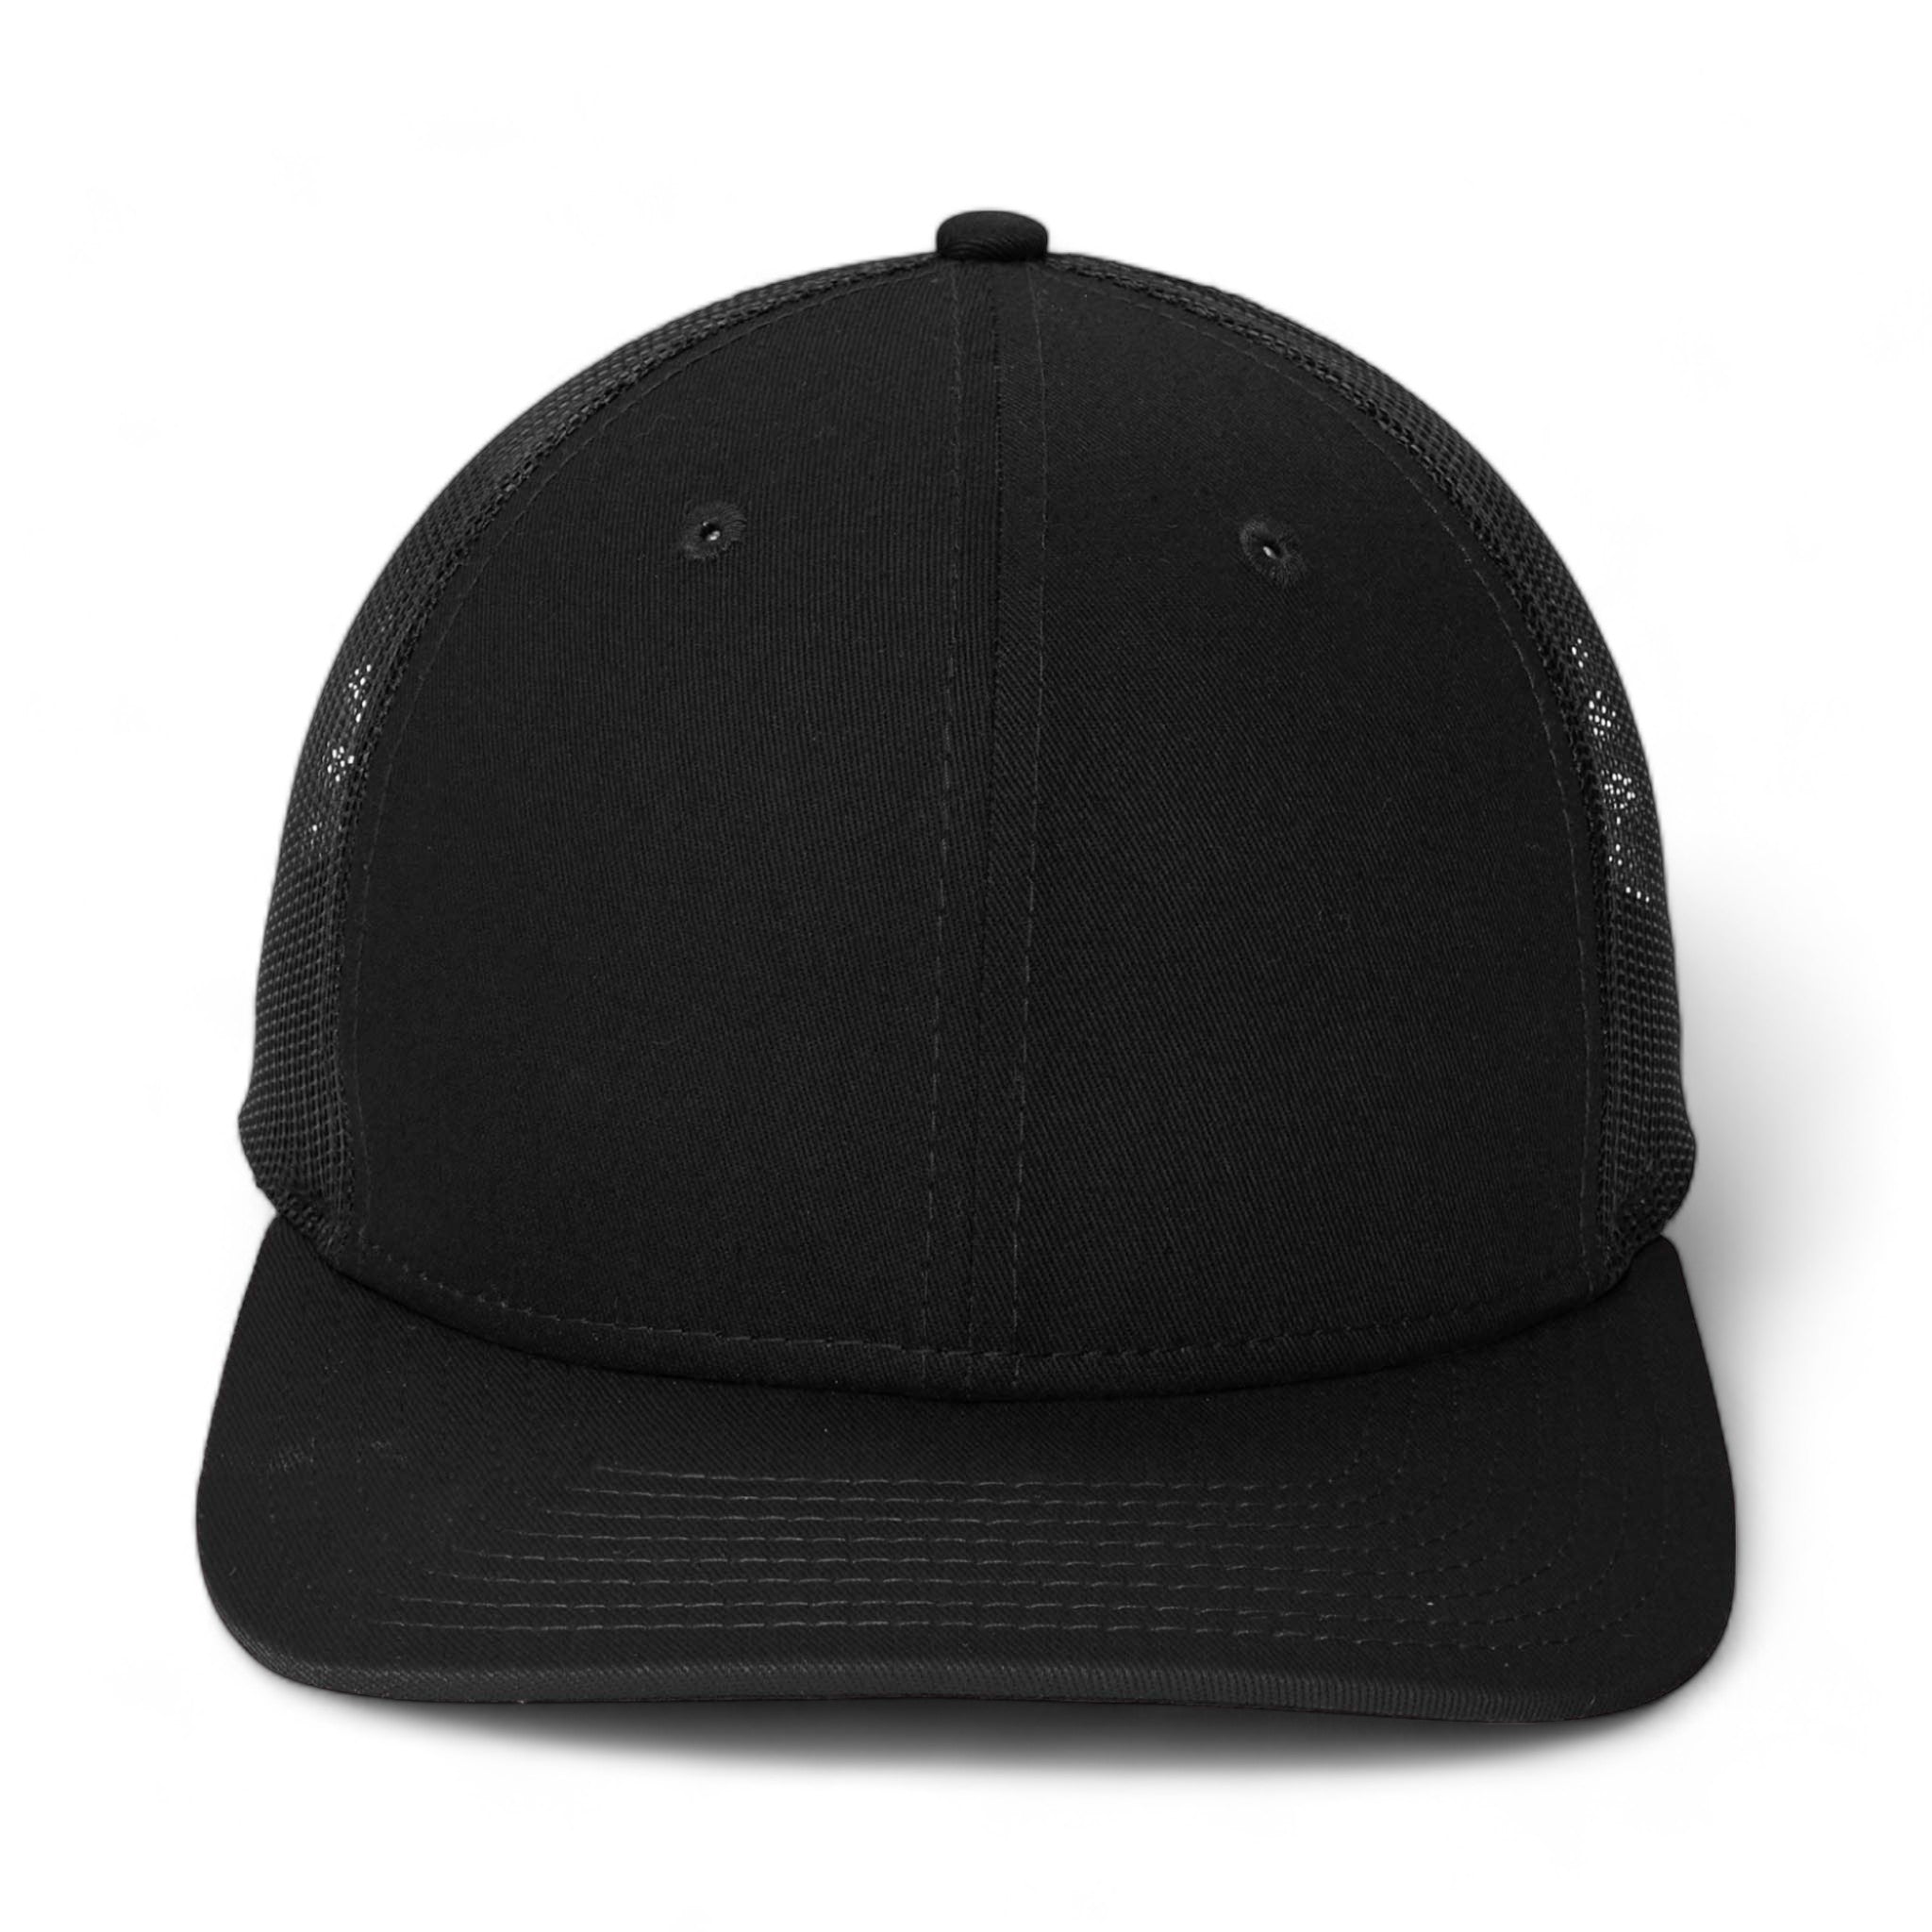 Front view of New Era NE207 custom hat in black